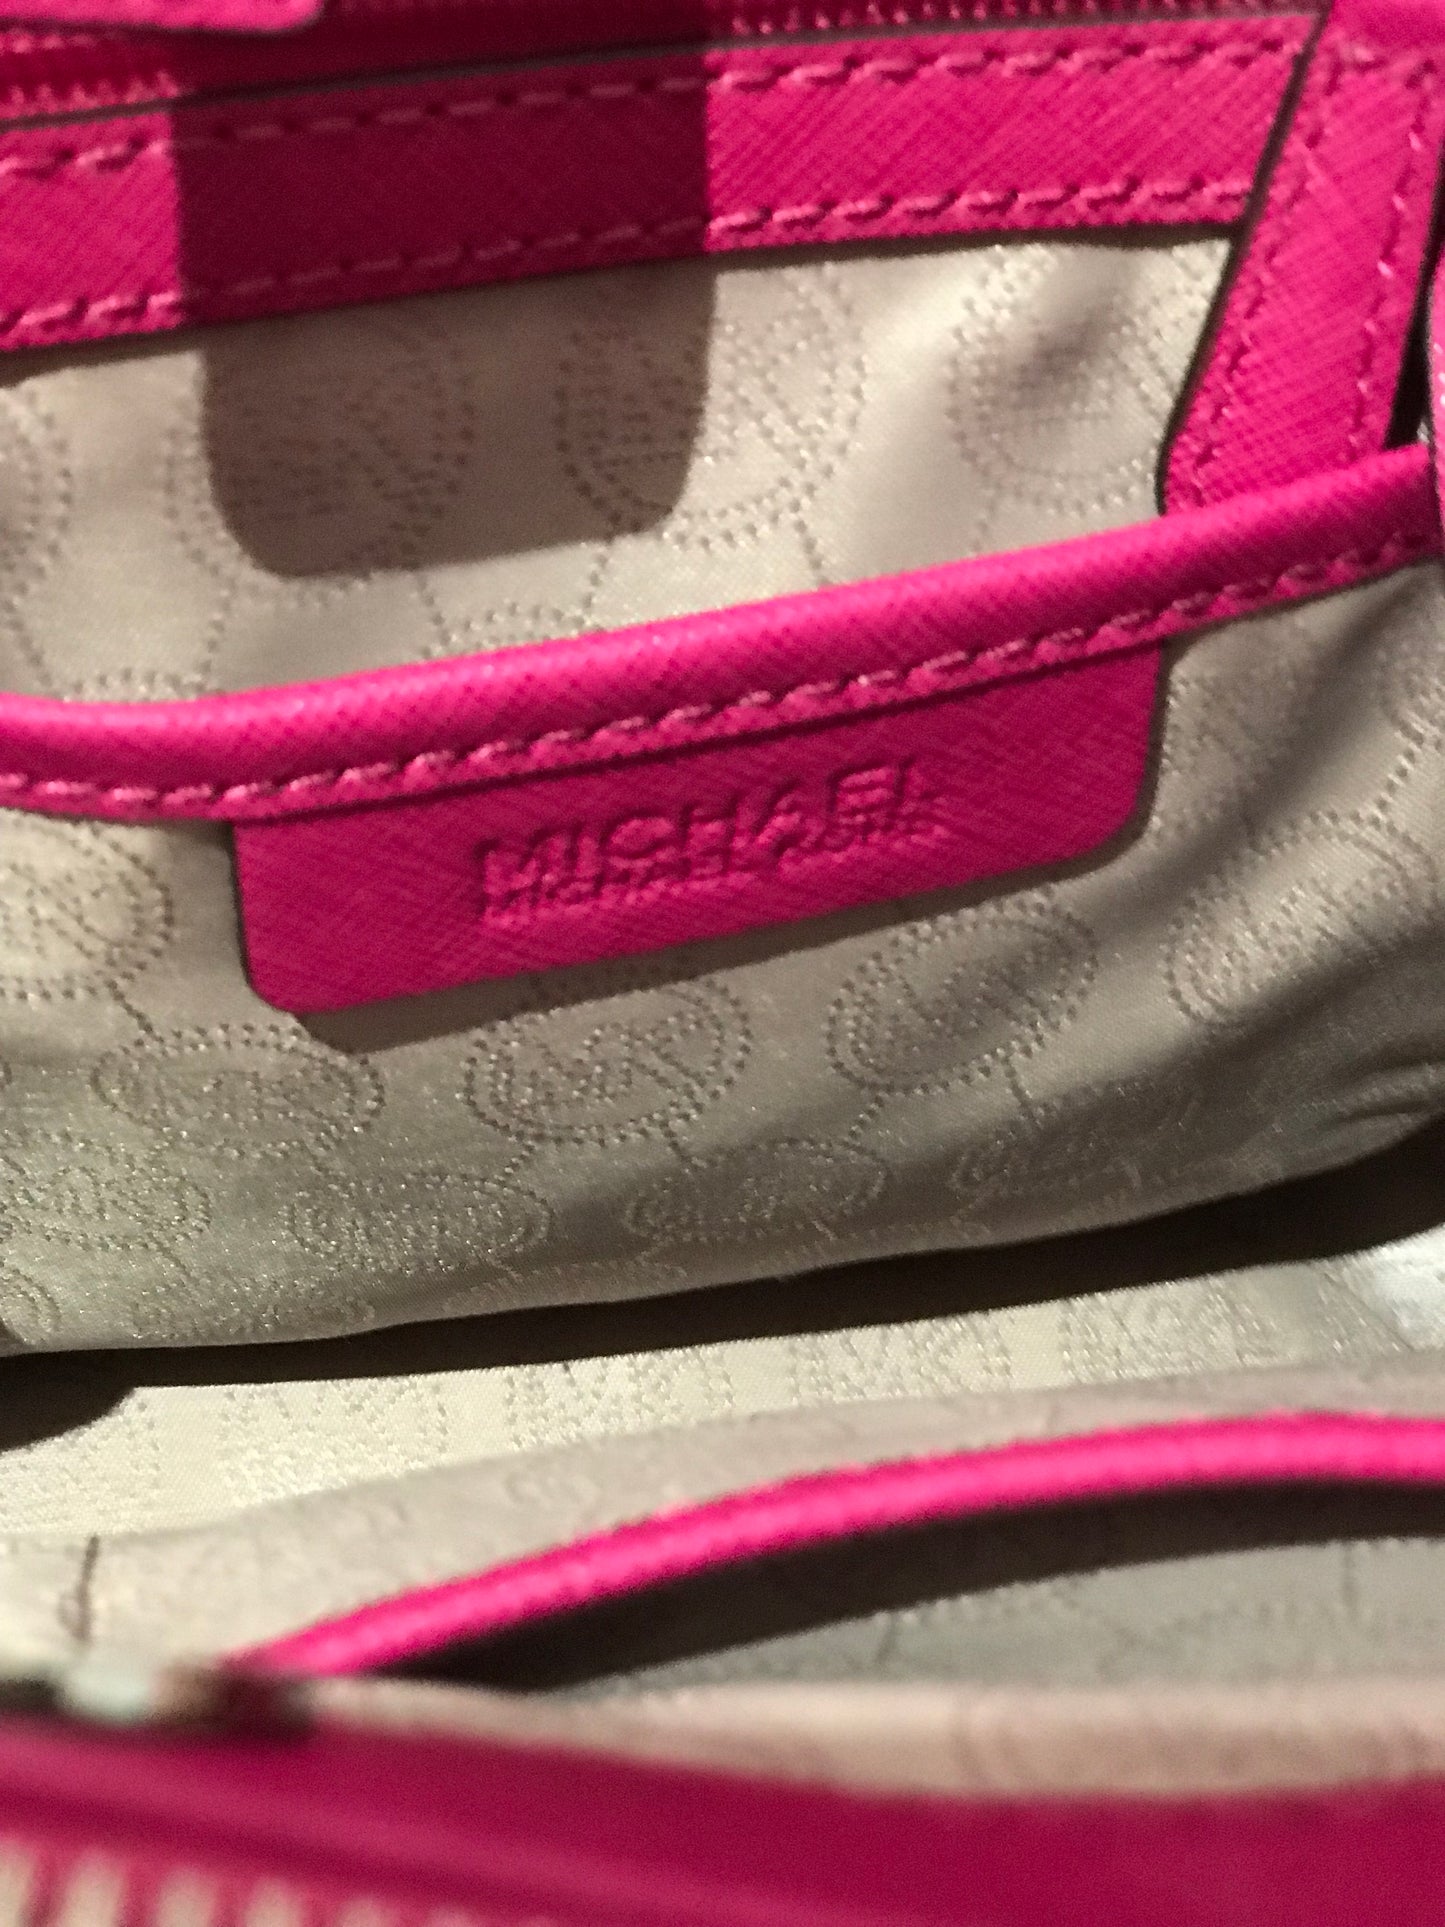 Michael Kors Hot Pink Leather Hand Bag